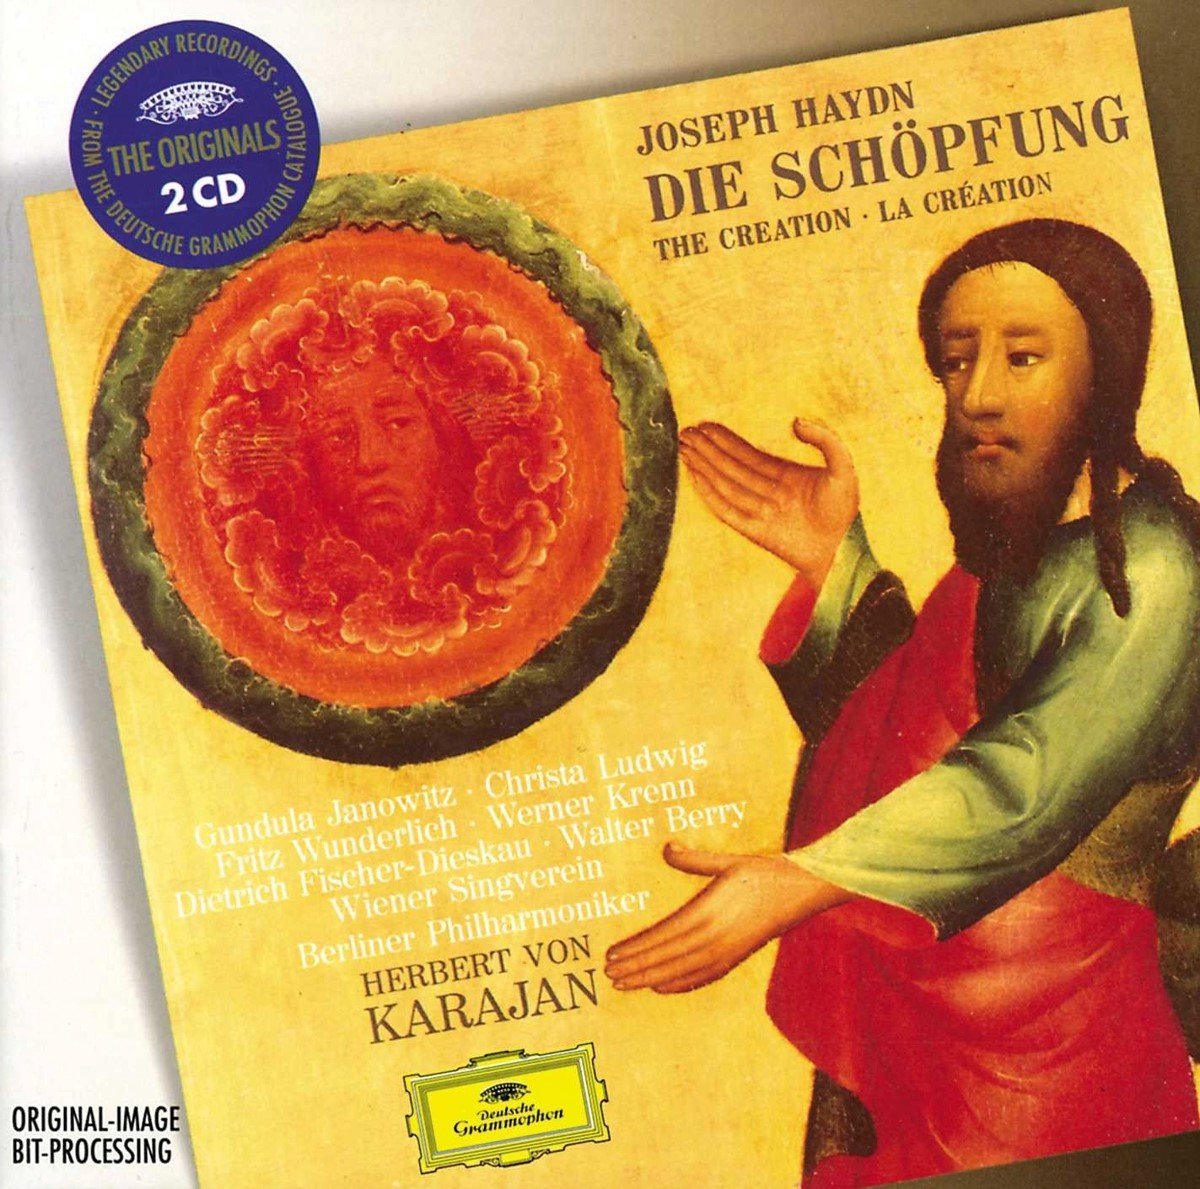 Berliner Philharmoniker, Herbert Von Karajan - Haydn: Die Schöpfung (Complete) (2 CD) (Complete) - Berliner Philharmoniker, Herbert Von Karajan